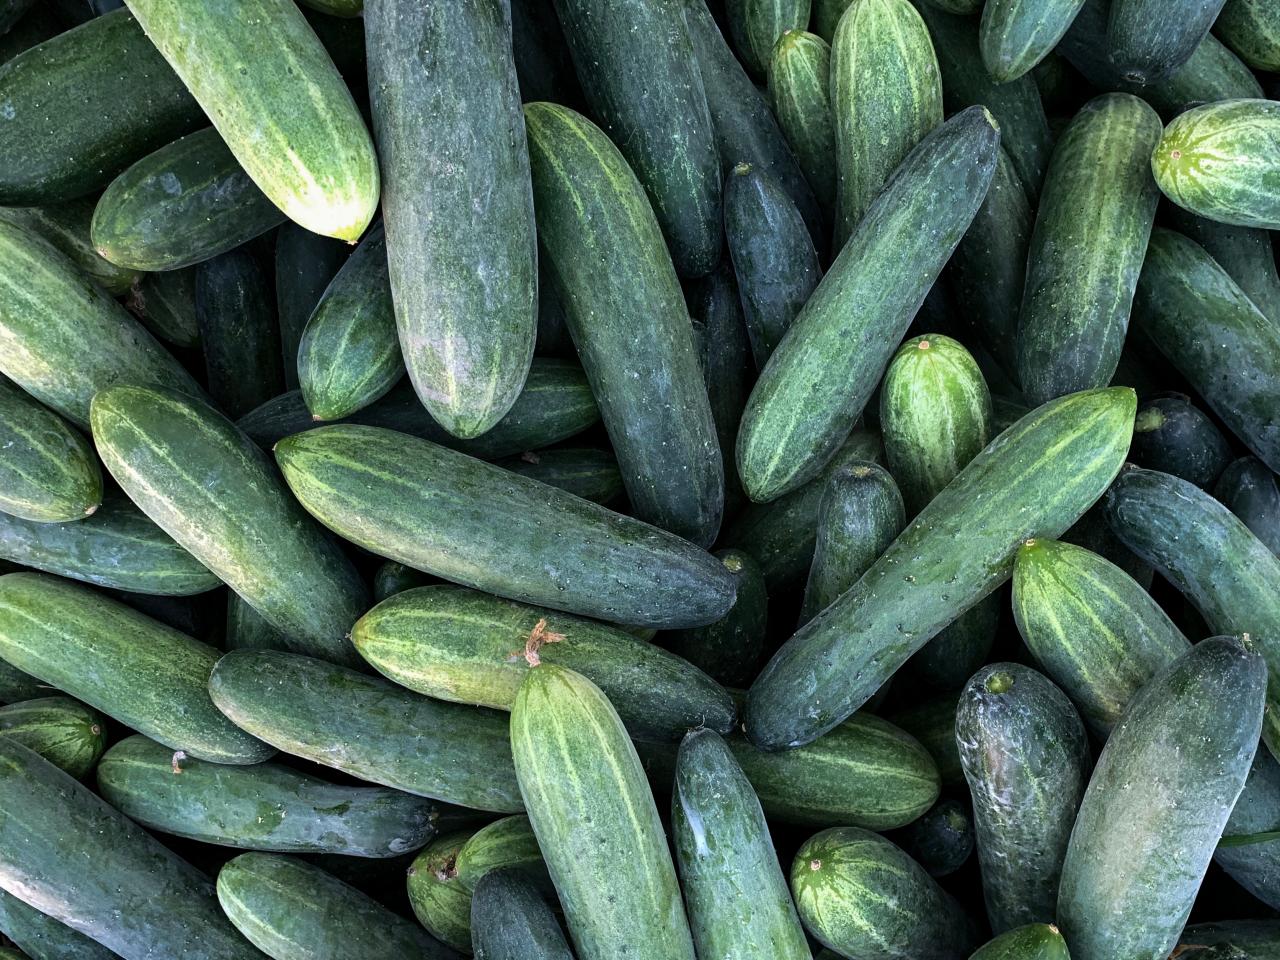 https://food.fnr.sndimg.com/content/dam/images/food/fullset/2023/6/30/fresh-cucumbers-on-farm-ready-for-market.jpg.rend.hgtvcom.1280.960.suffix/1688137605714.jpeg